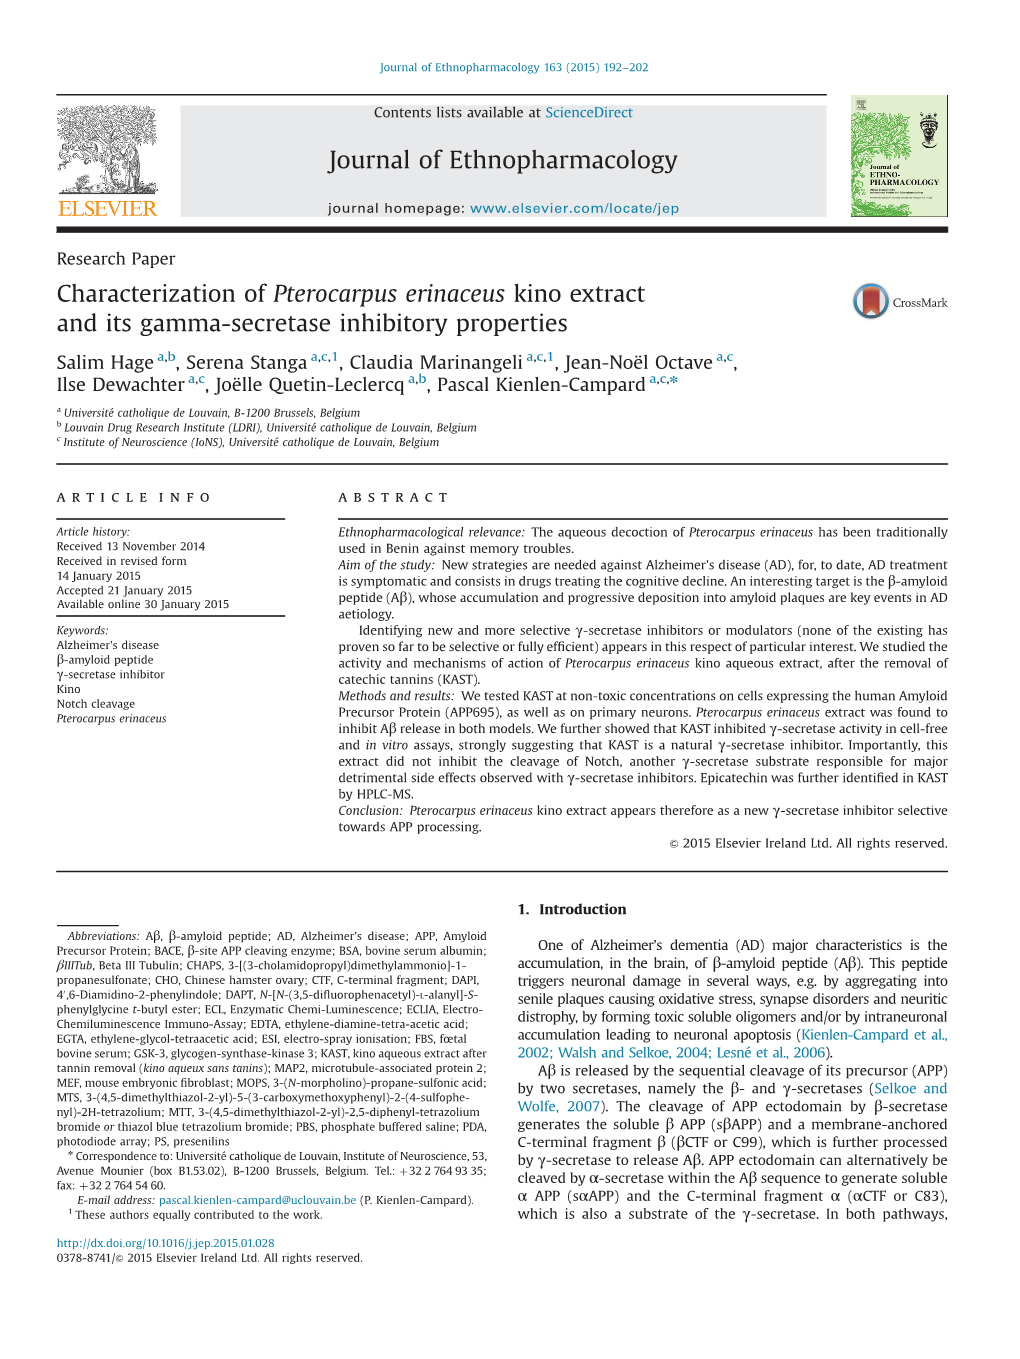 Characterization of Pterocarpus Erinaceus Kino Extract and Its Gamma-Secretase Inhibitory Properties